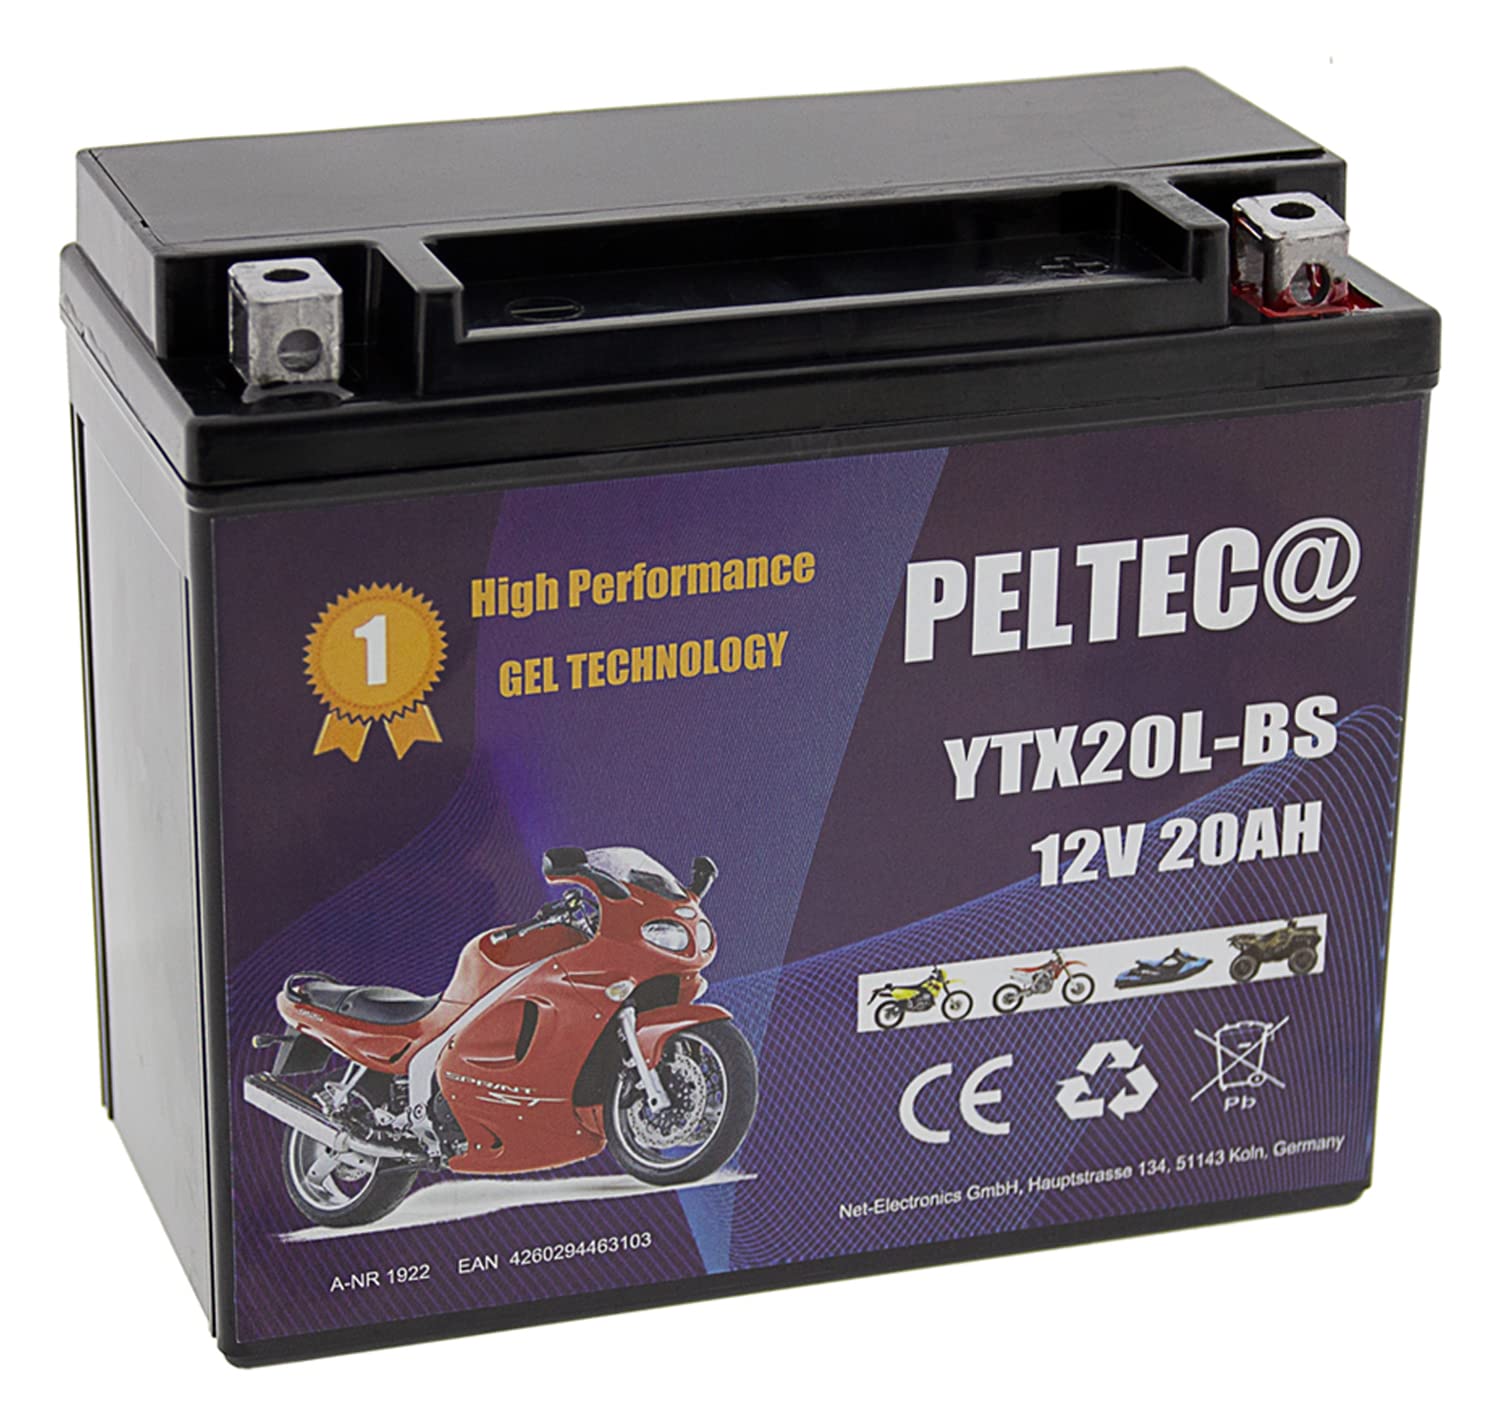 Peltec Premium Motorrad Batterie GEL Akku 12V 20Ah YTX20L-BS 51821 GTX20L-BS CTX20L-BS Scooter Elektroroller Quad Jetski von PELTEC@